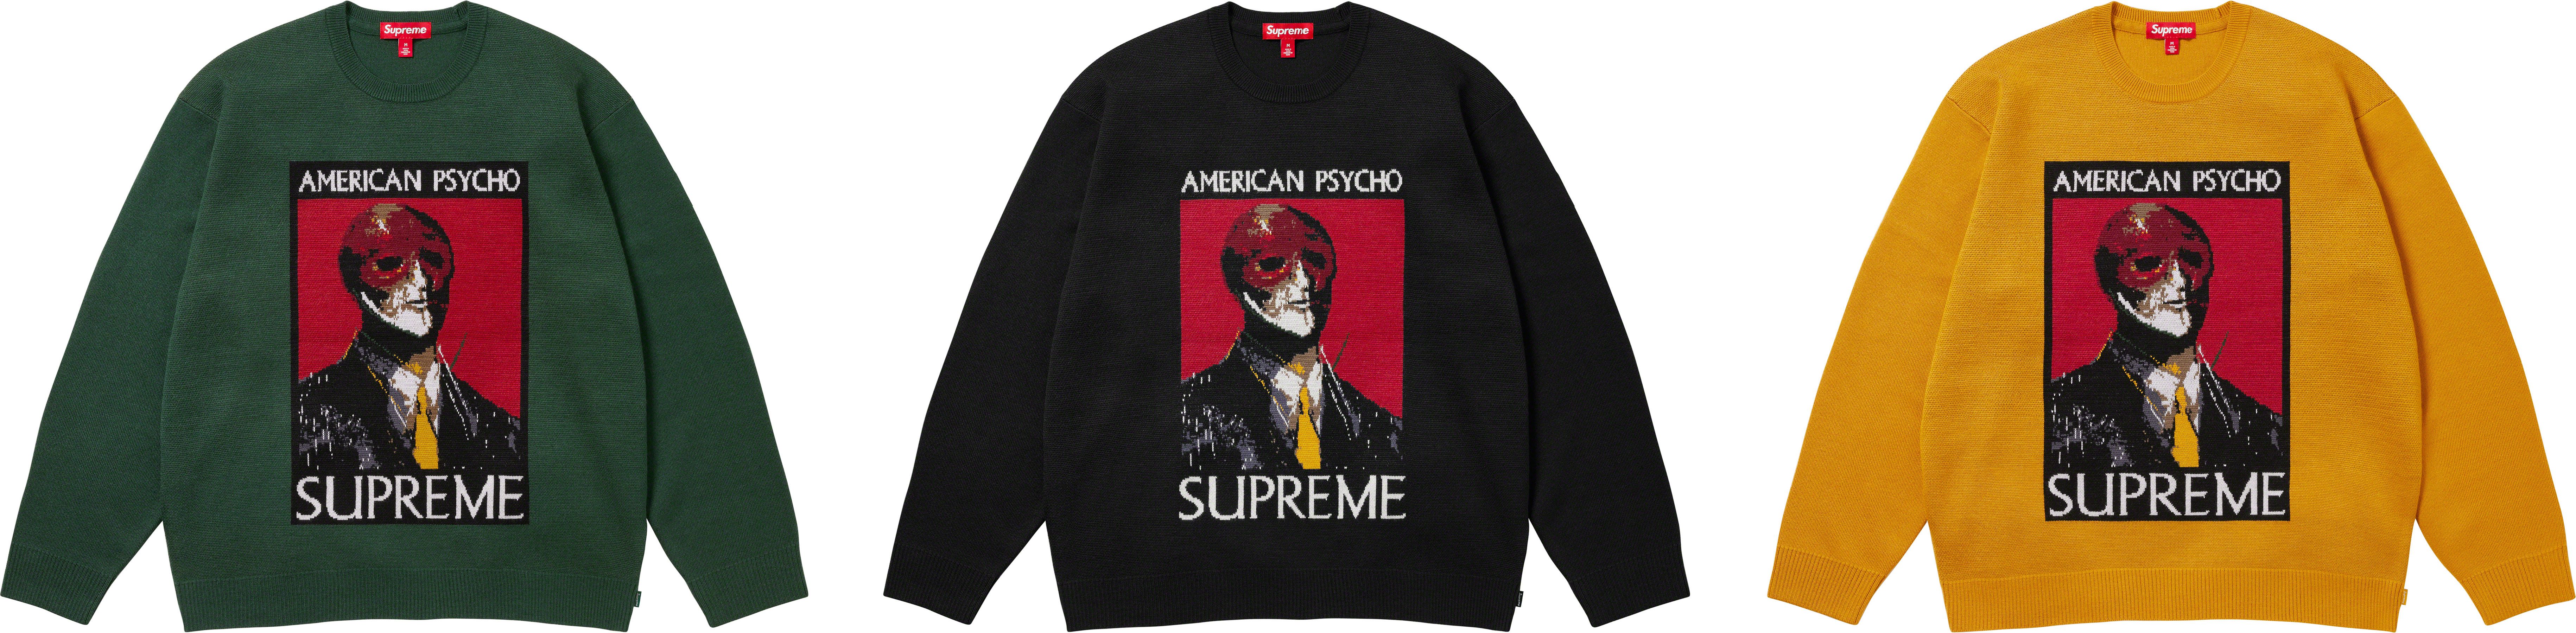 Supreme American Psycho Sweater Black-